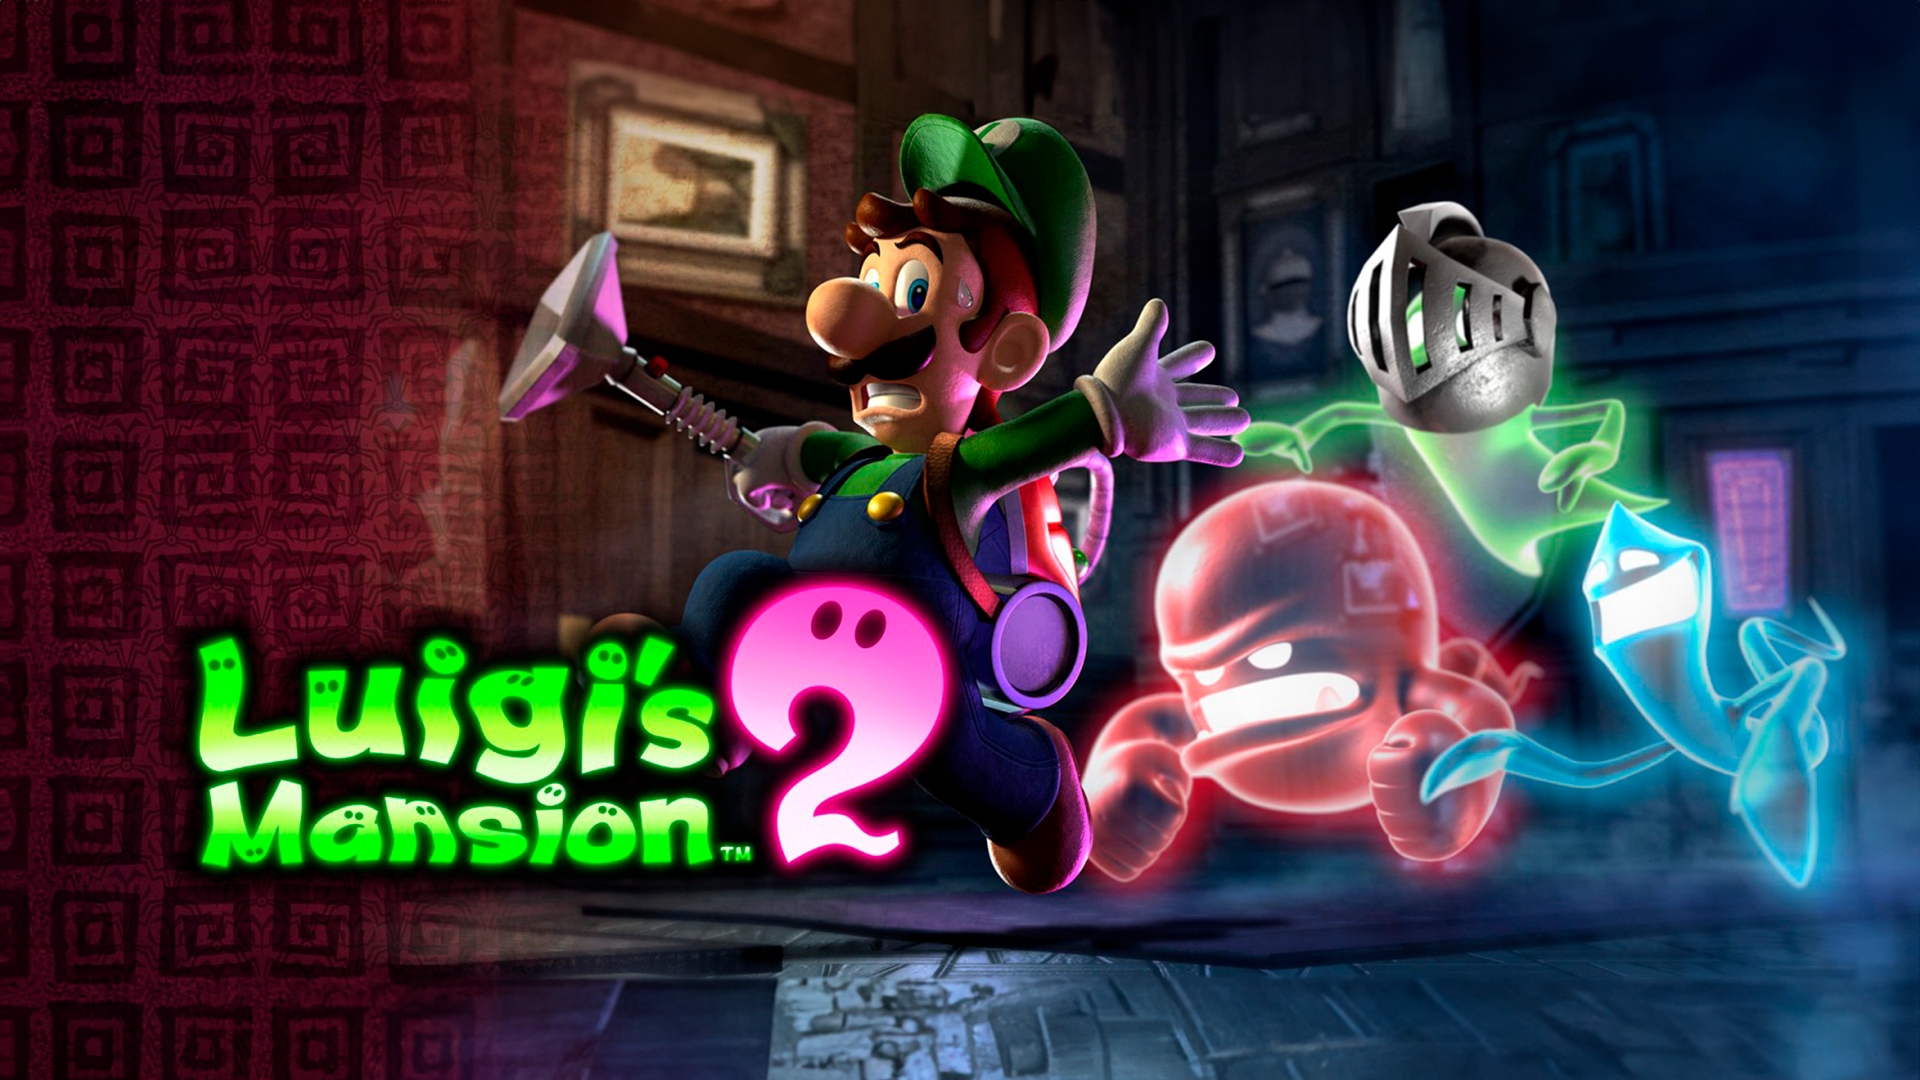 Nintendo switch luigi mansion. Luigi's Mansion Nintendo 3ds. Luigi's Mansion [3ds]. Luigi s Mansion 3ds. Luigi's Mansion 2 (3ds).